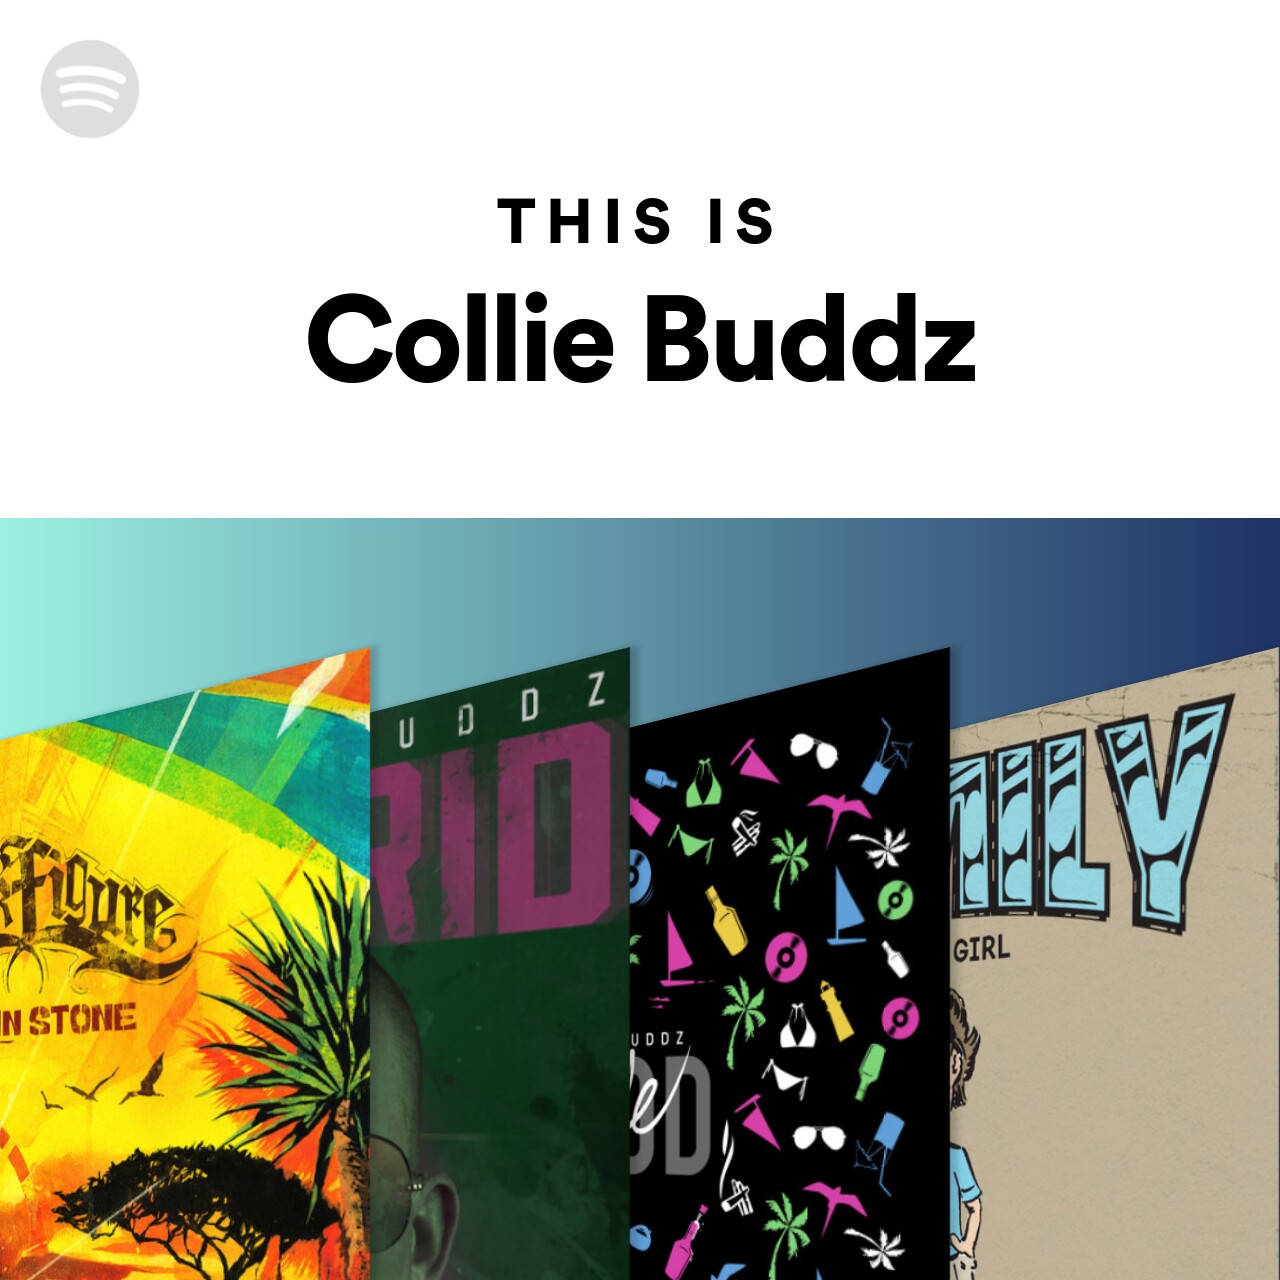 collie buddz tour setlist